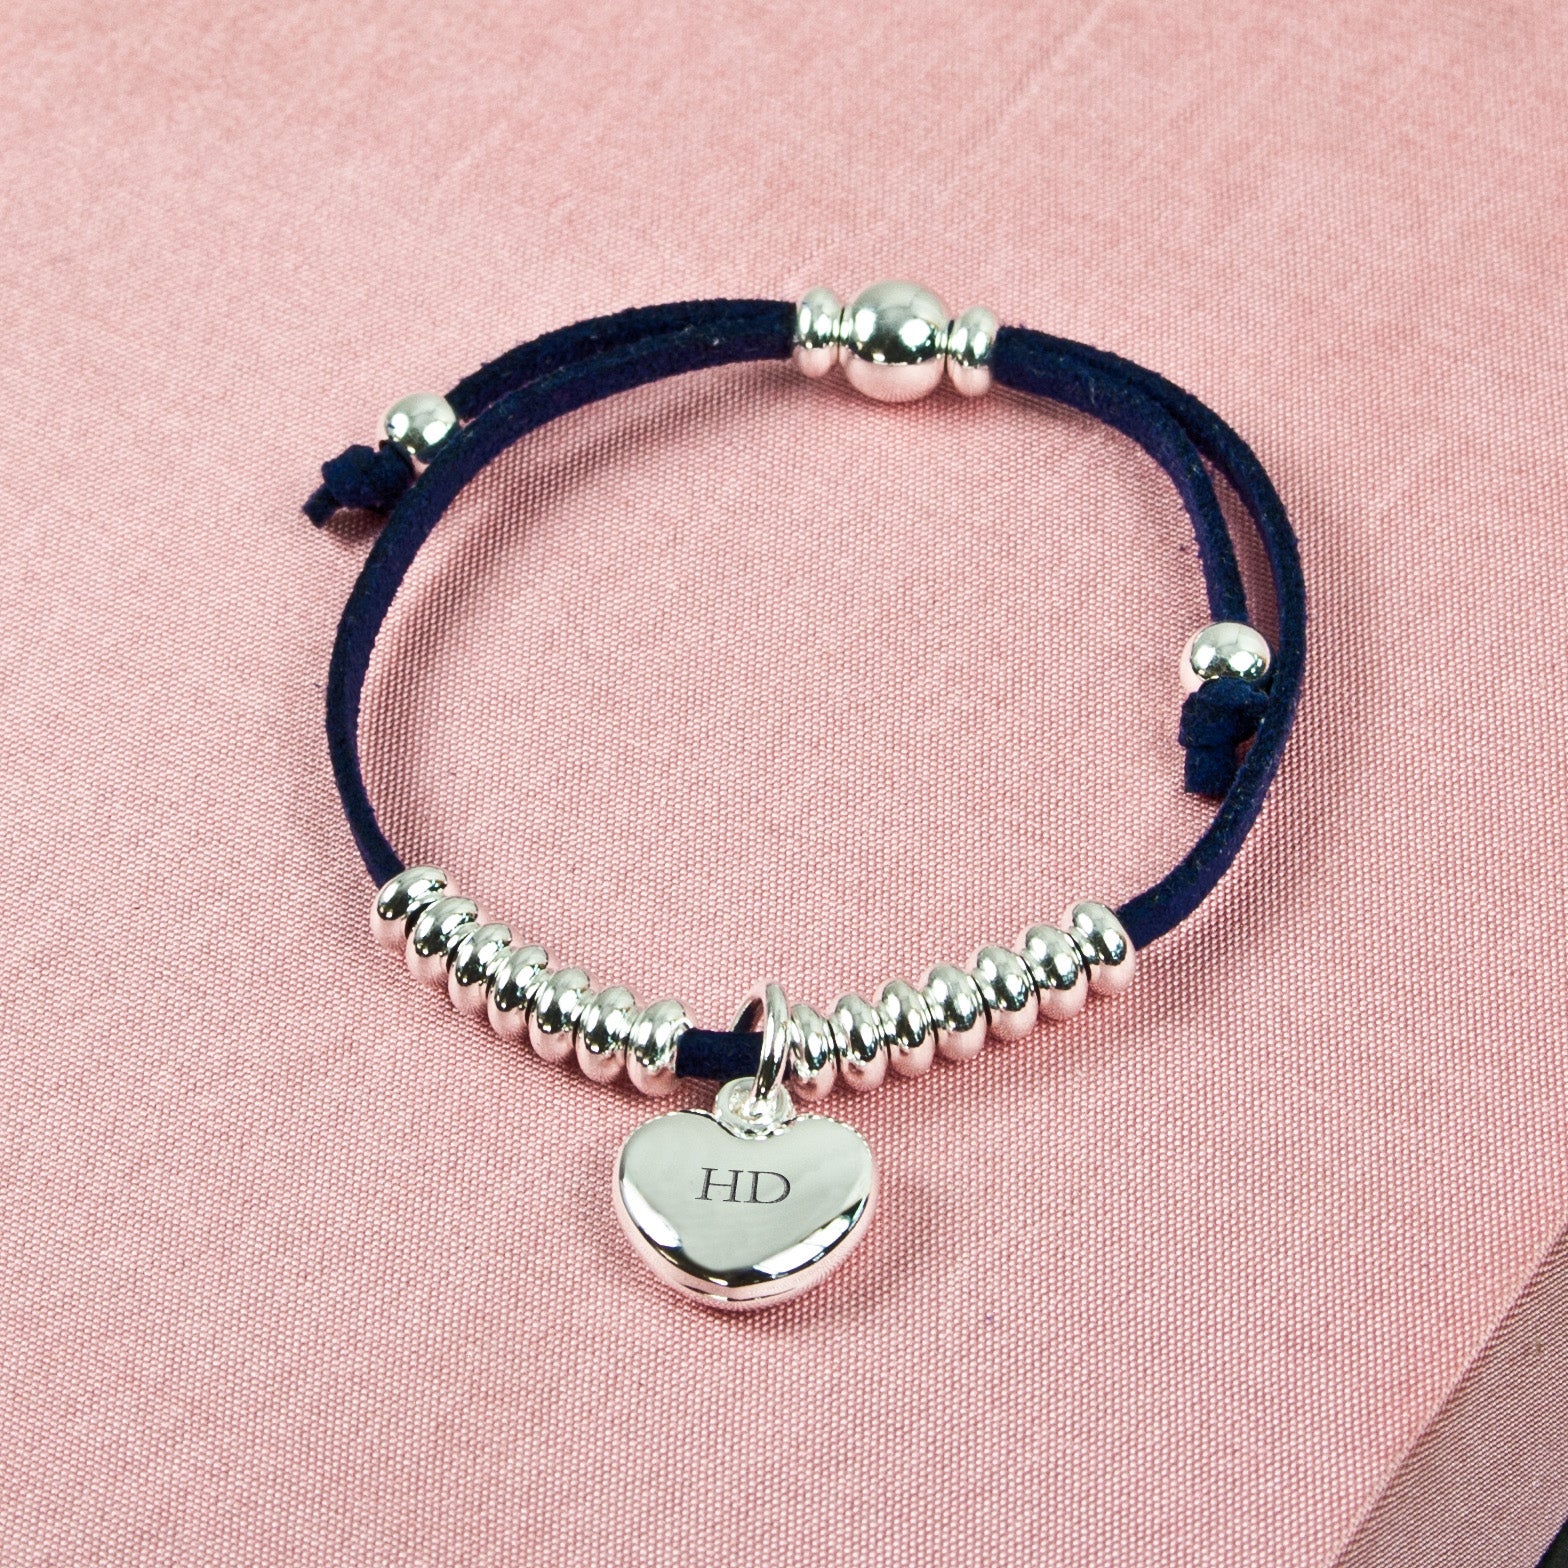 Best Friend Love Heart Friendship Promise Charm Card Wish You Me Bracelet  Gift | eBay